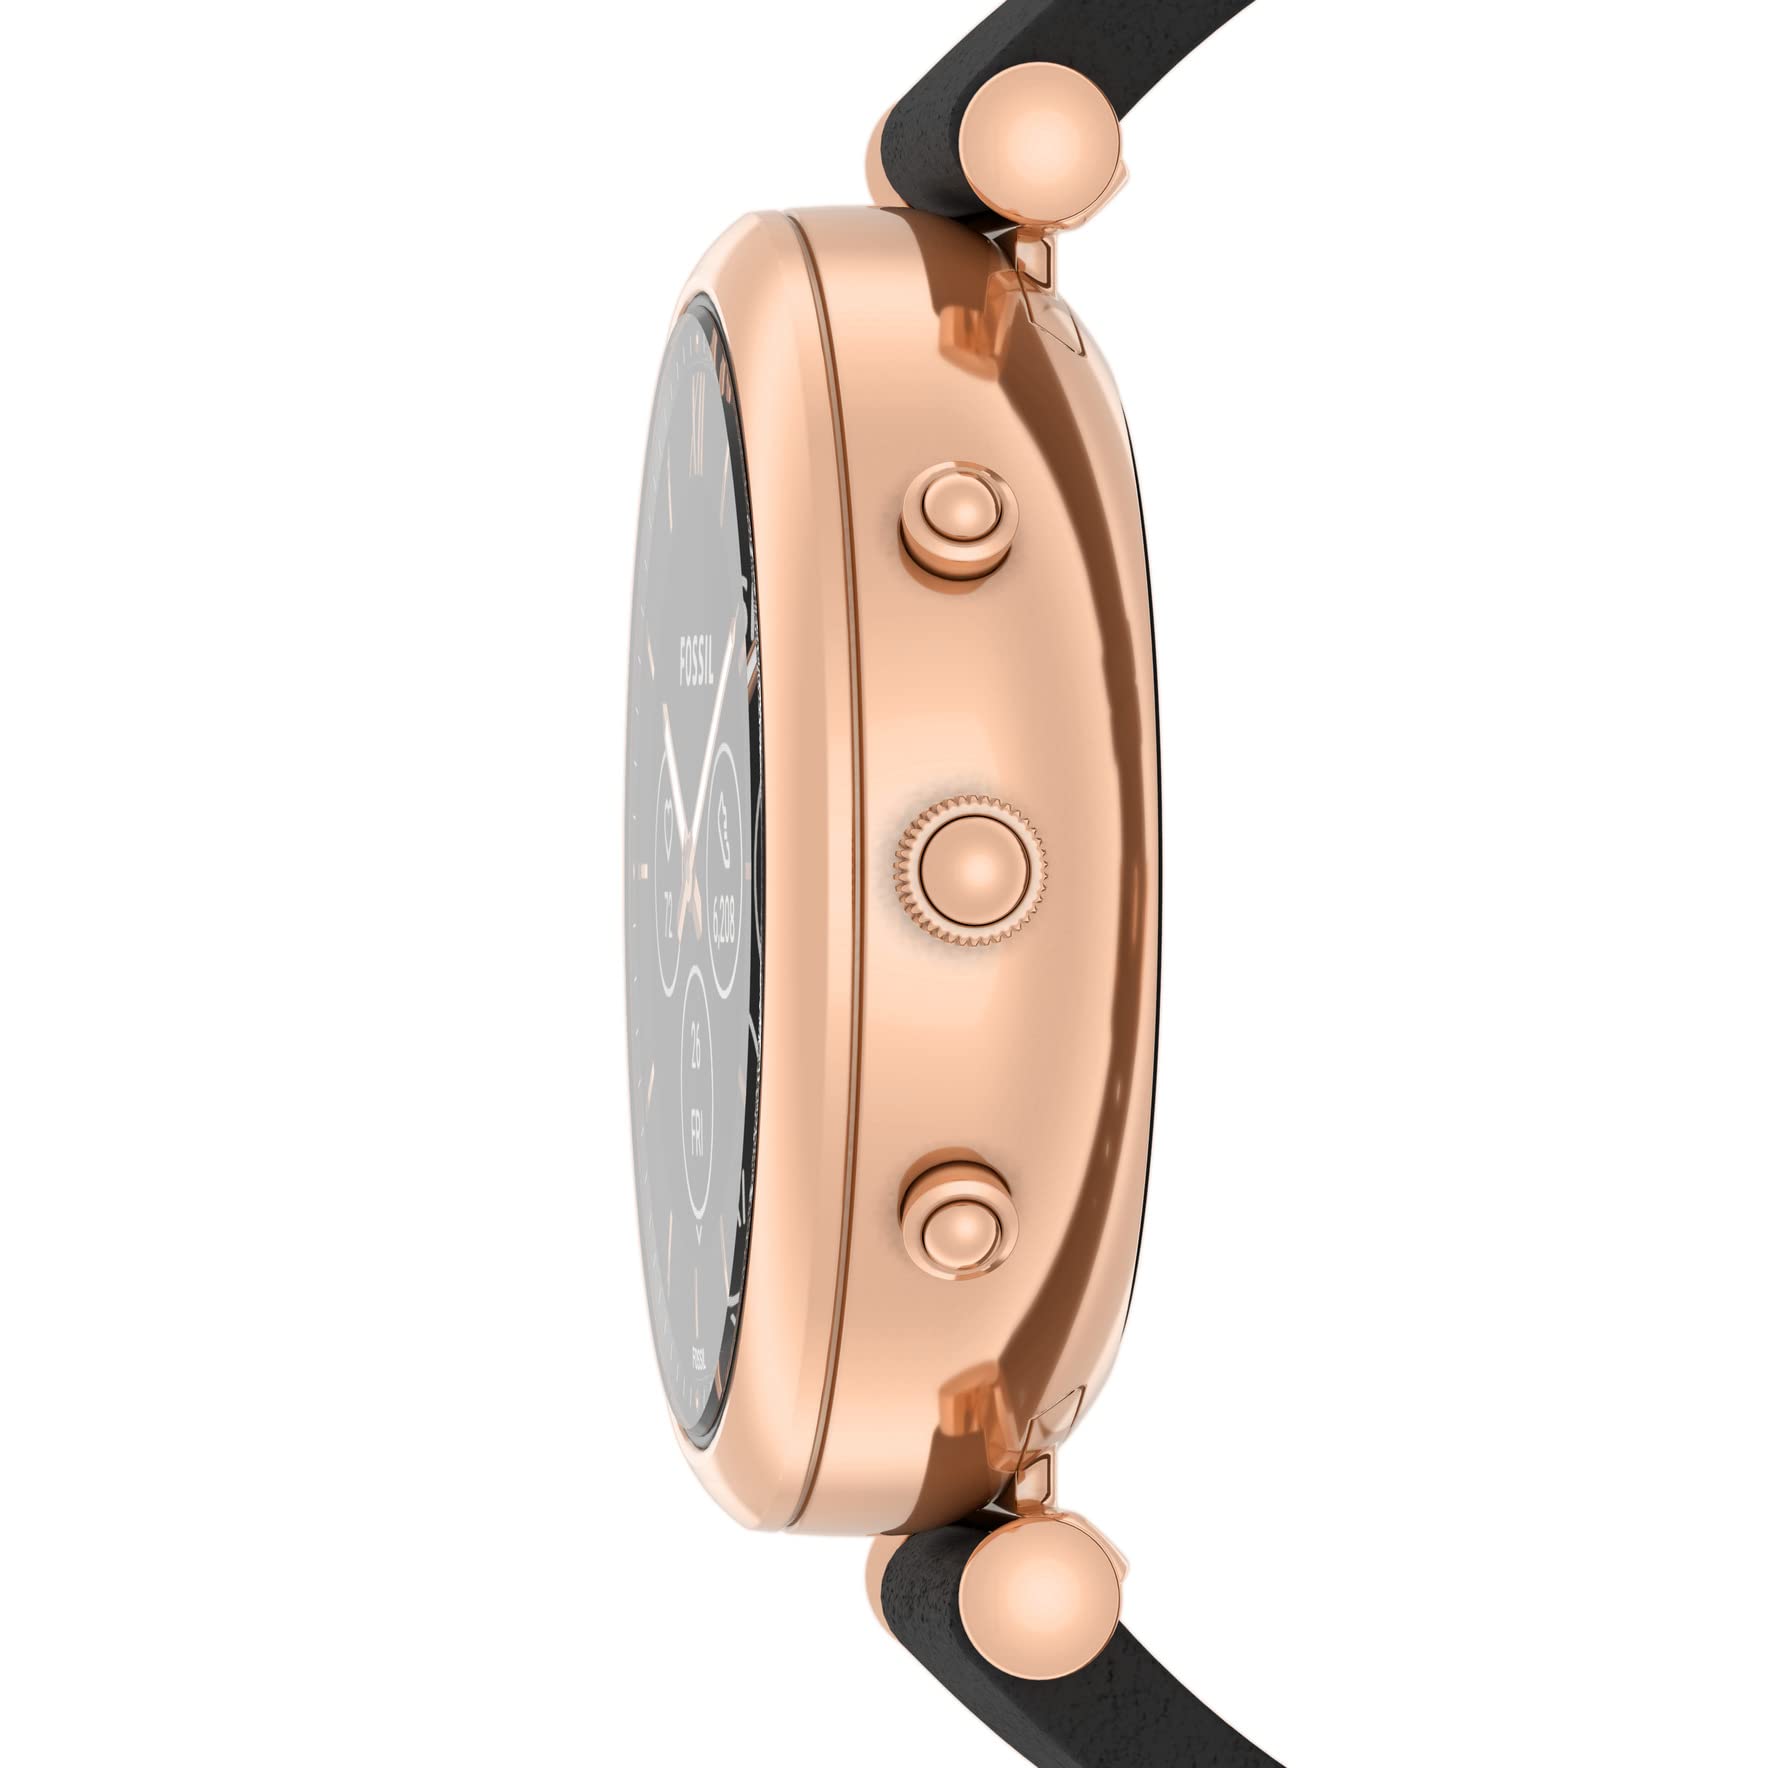 Fossil Women's Gen 6 Hybrid Smart Watch with Alexa Built-In, Fitness Tracker, Sleep Tracker, Heart Rate Monitor, Music Control, Smartphone Notifications